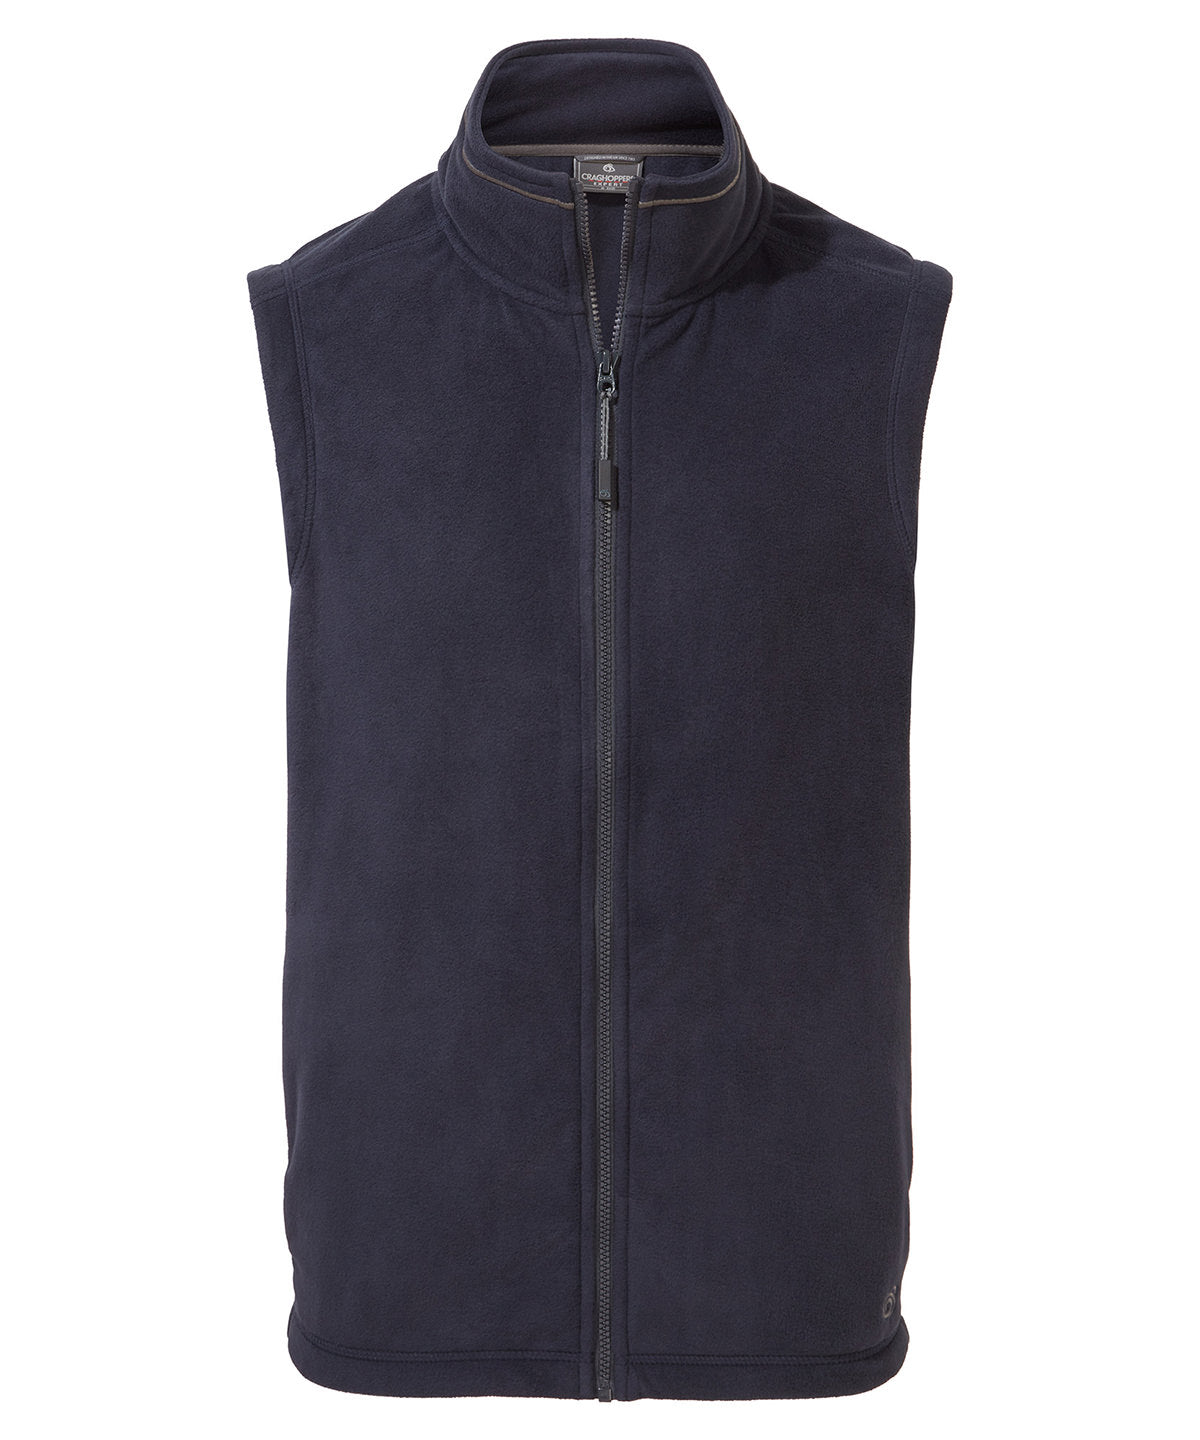 Personalised Vests - Black Craghoppers Expert Corey fleece vest